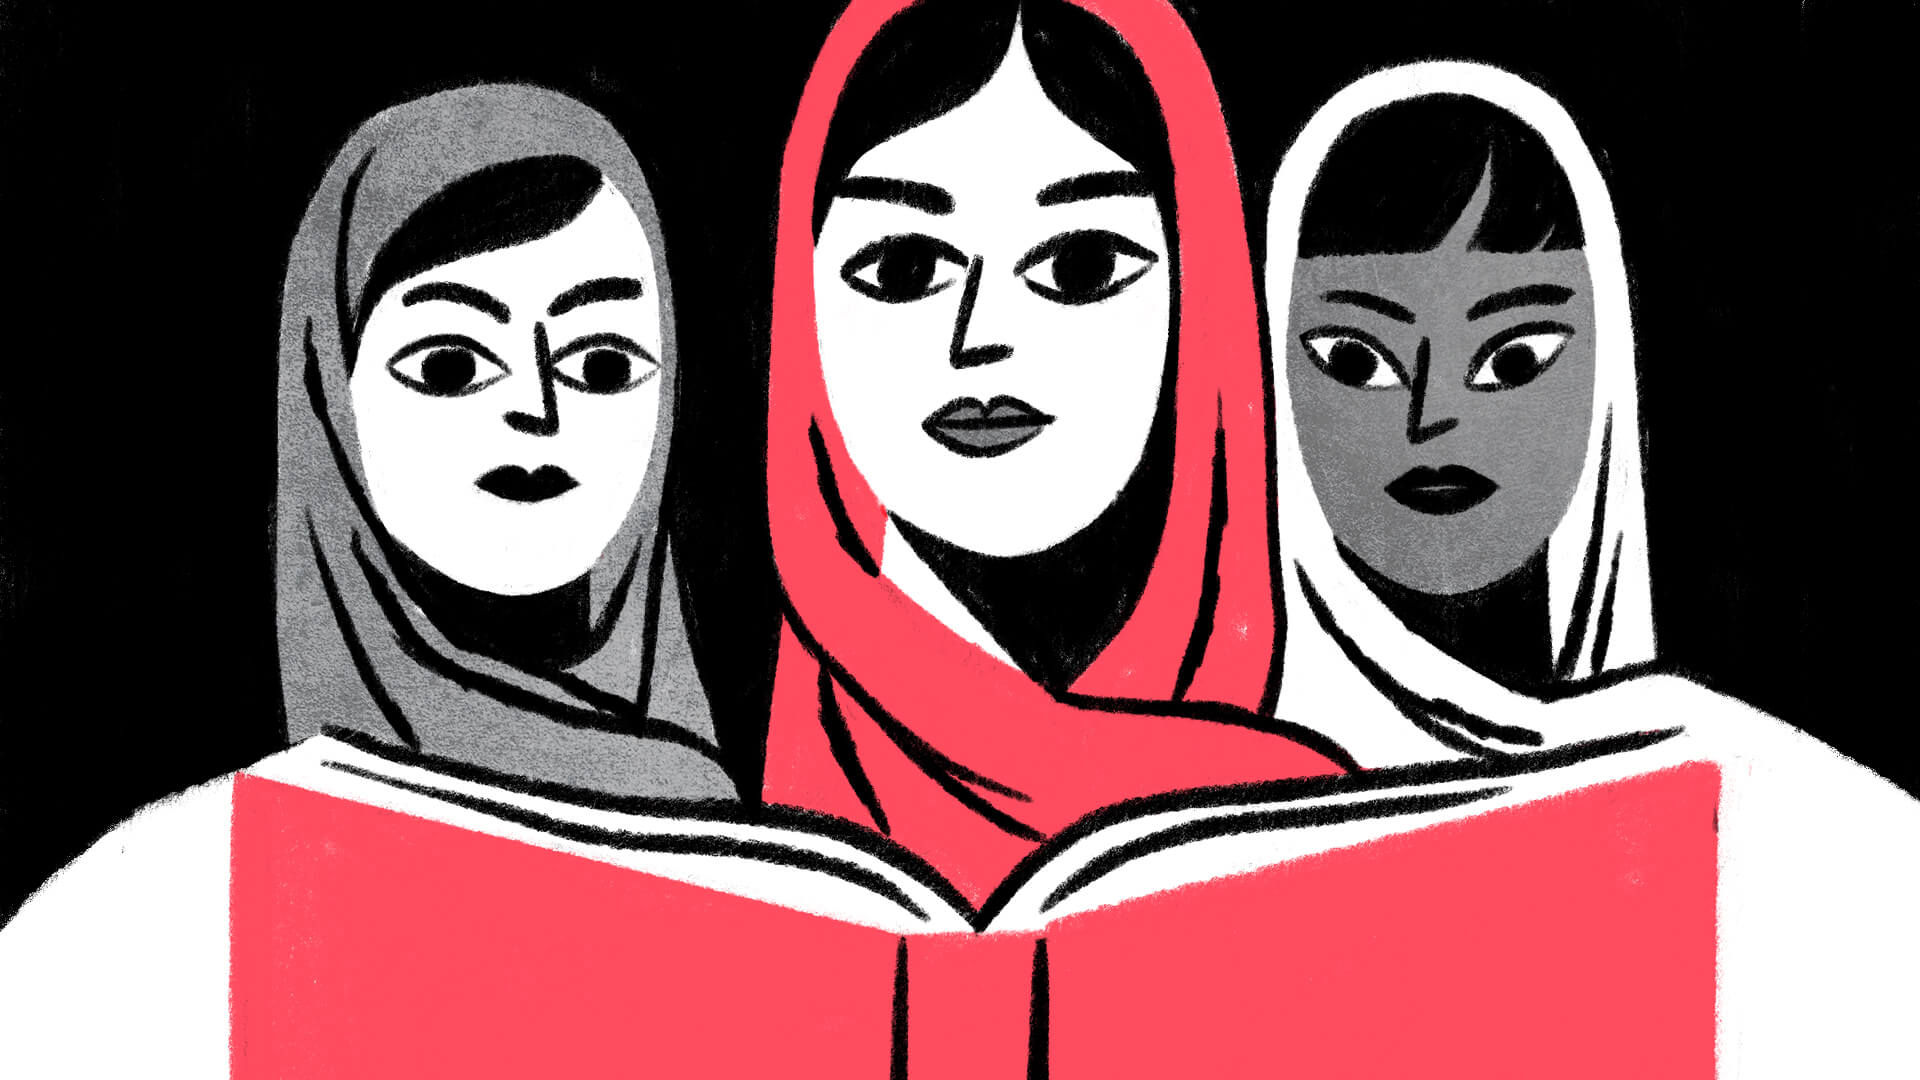 Illustration depicting Afghan women reading. Illustrator: Anina Takeff.